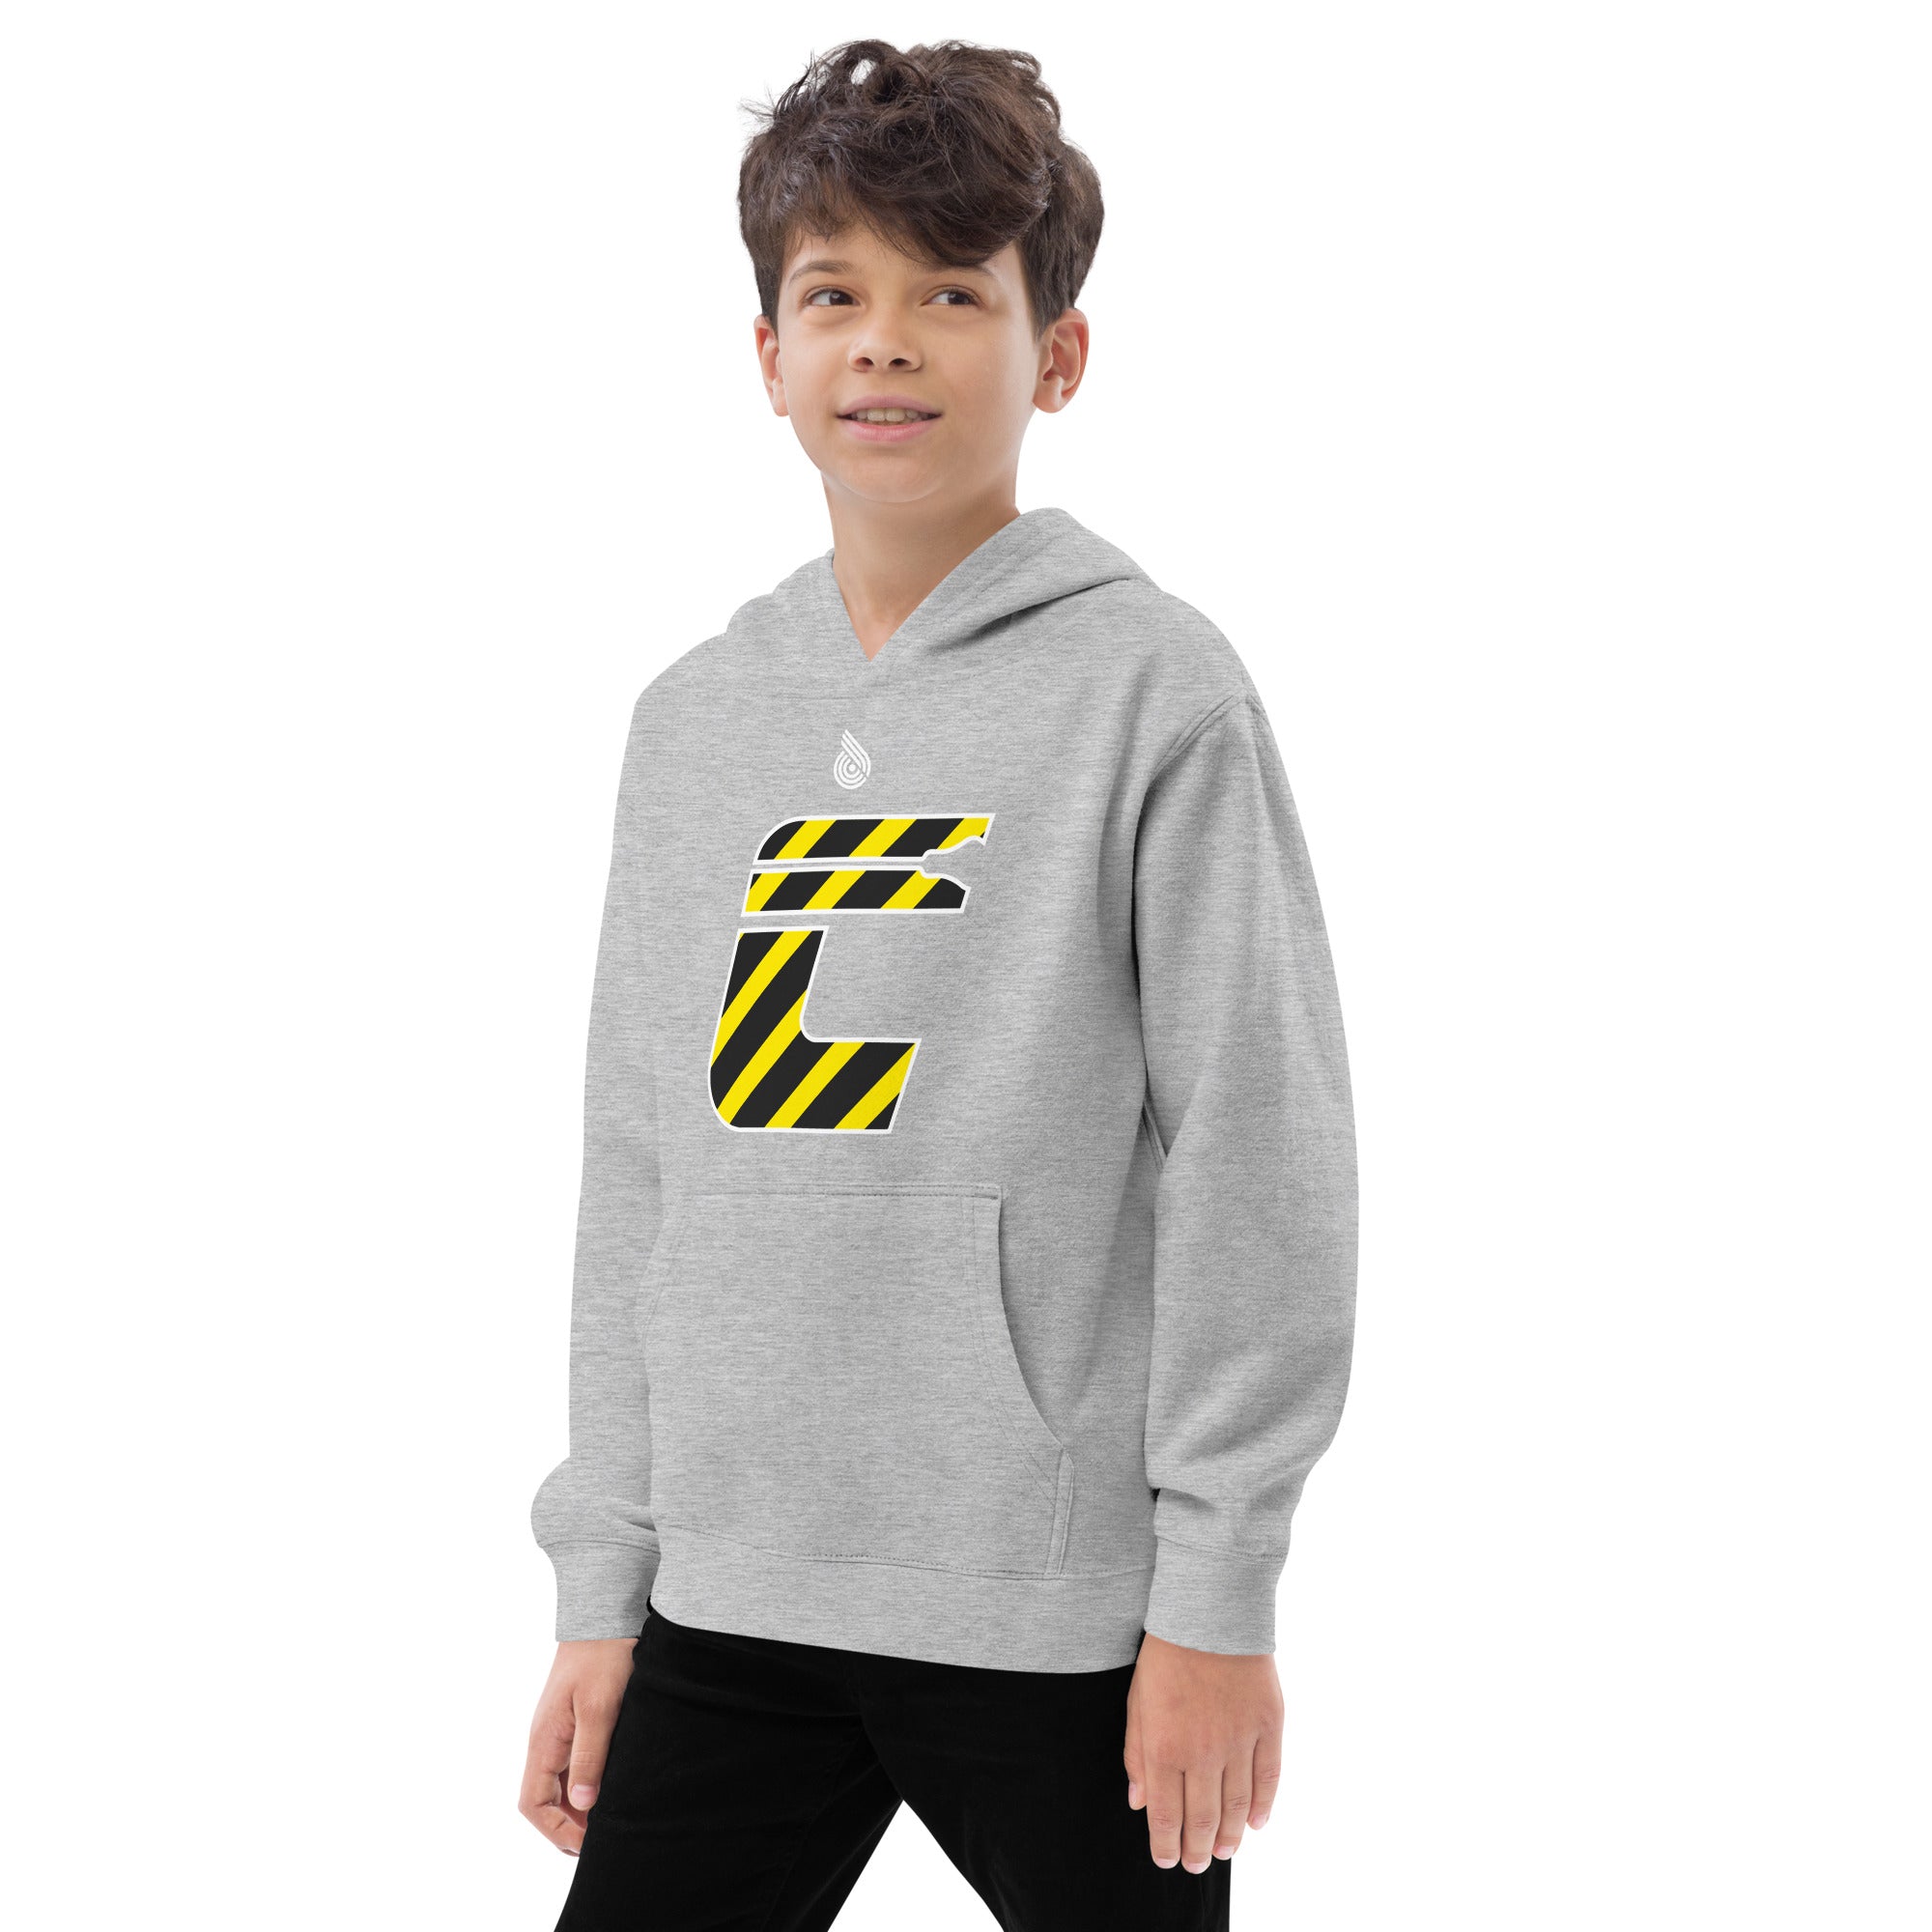 Construct Youth fleece hoodie